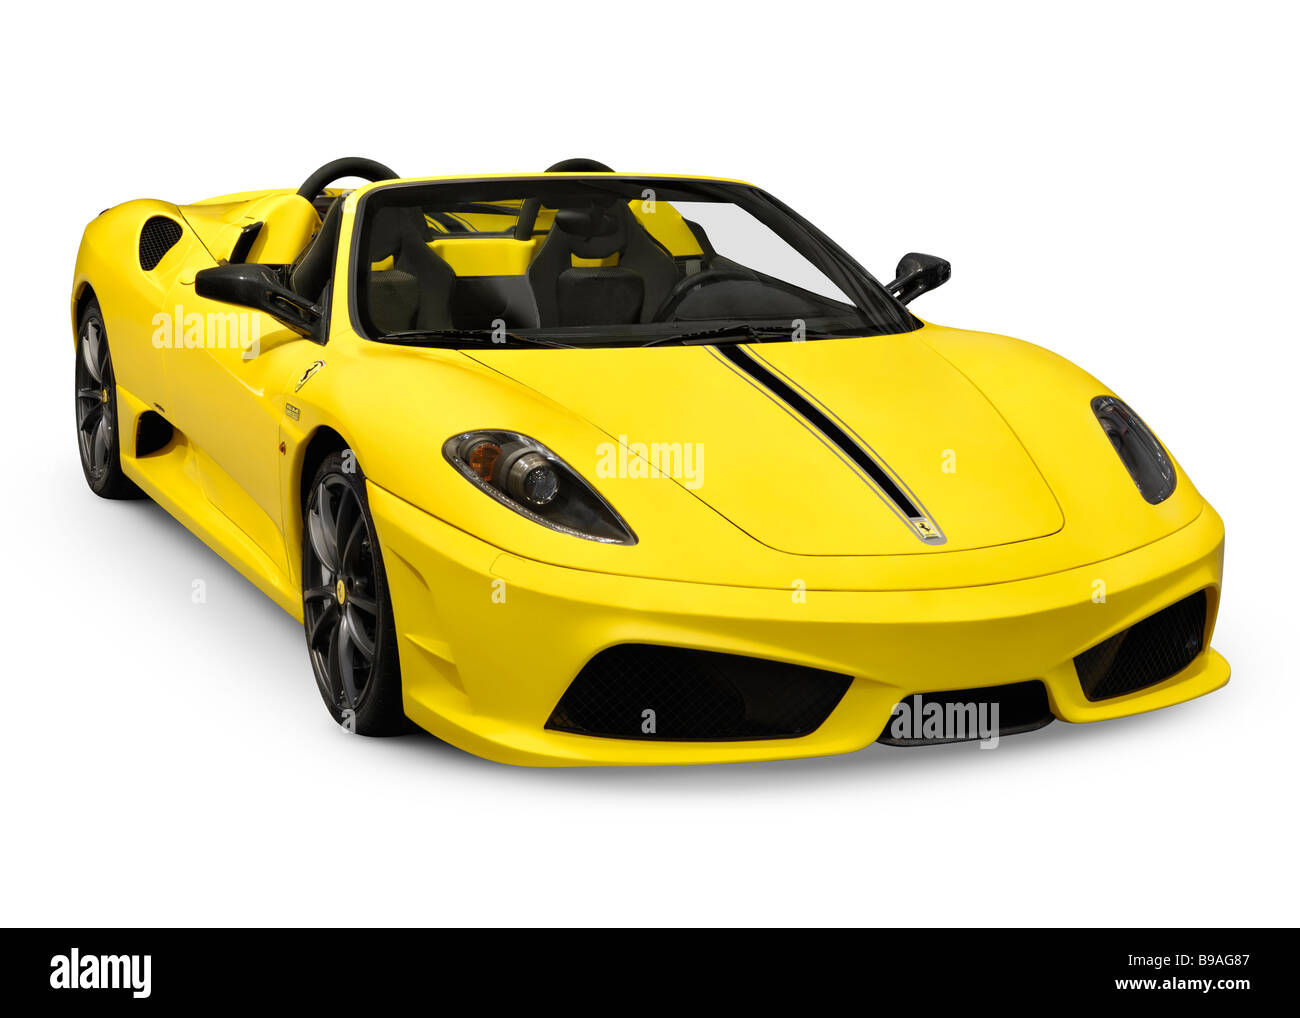 Licencia e impresiones en MaximImages.com - Ferrari coche deportivo de lujo, supercoche, automotor foto de archivo. Foto de stock